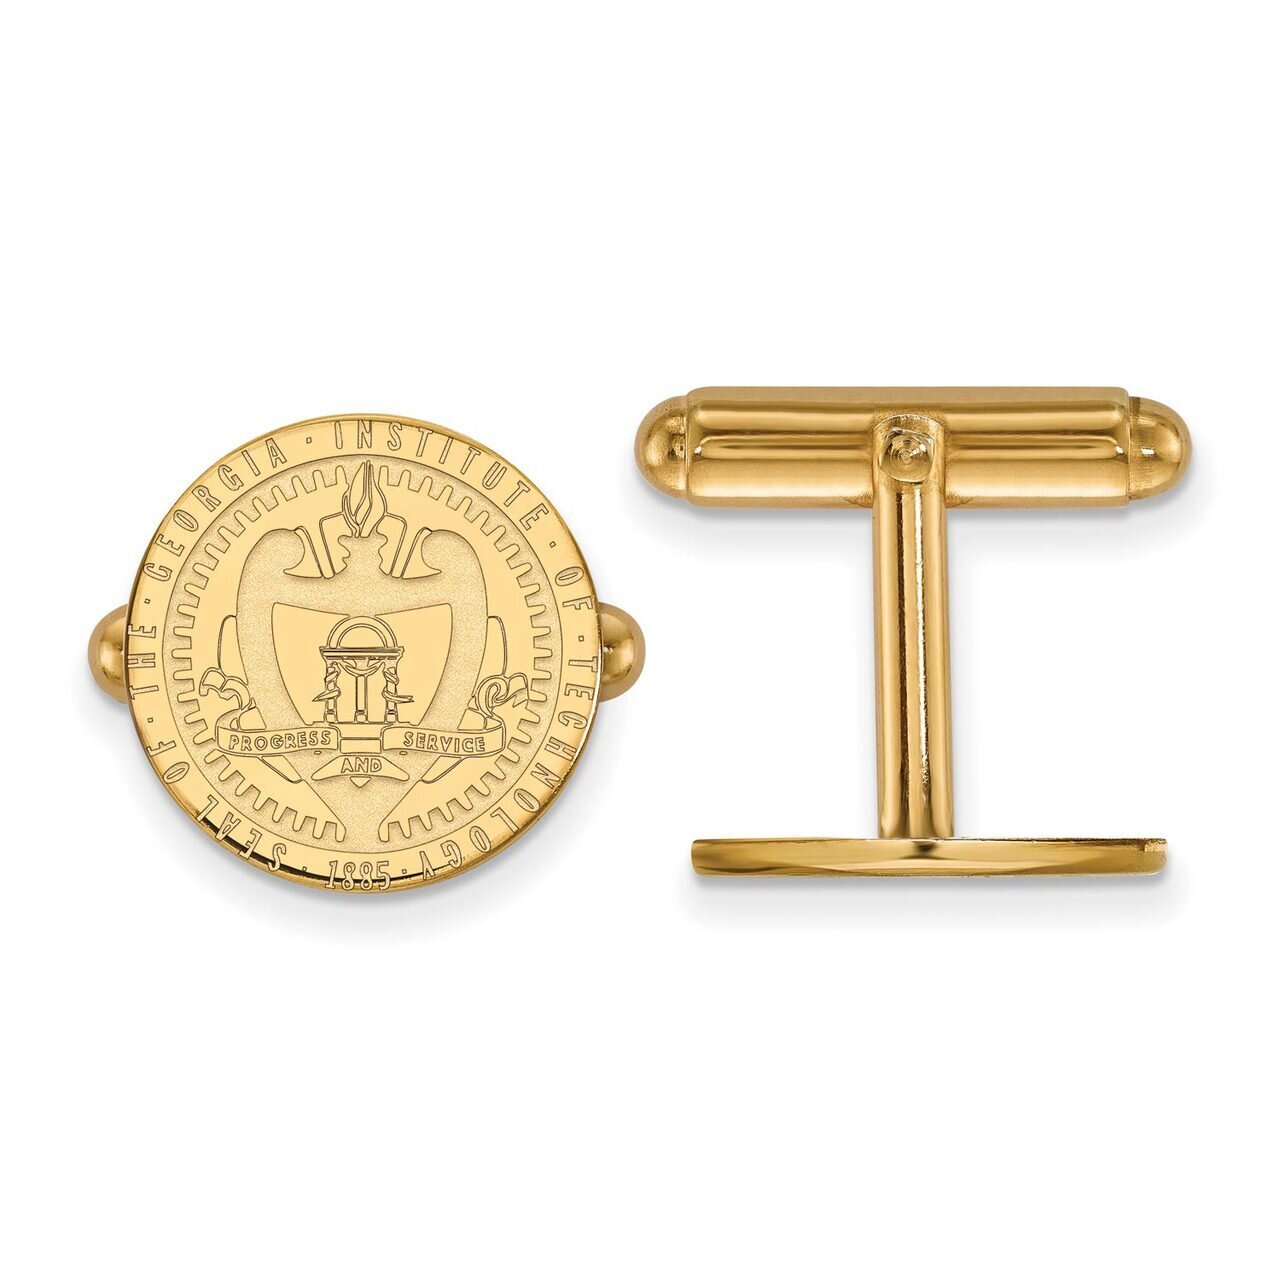 Georgia Institute of Technology Crest Cufflinks Gold-plated Silver GP058GT